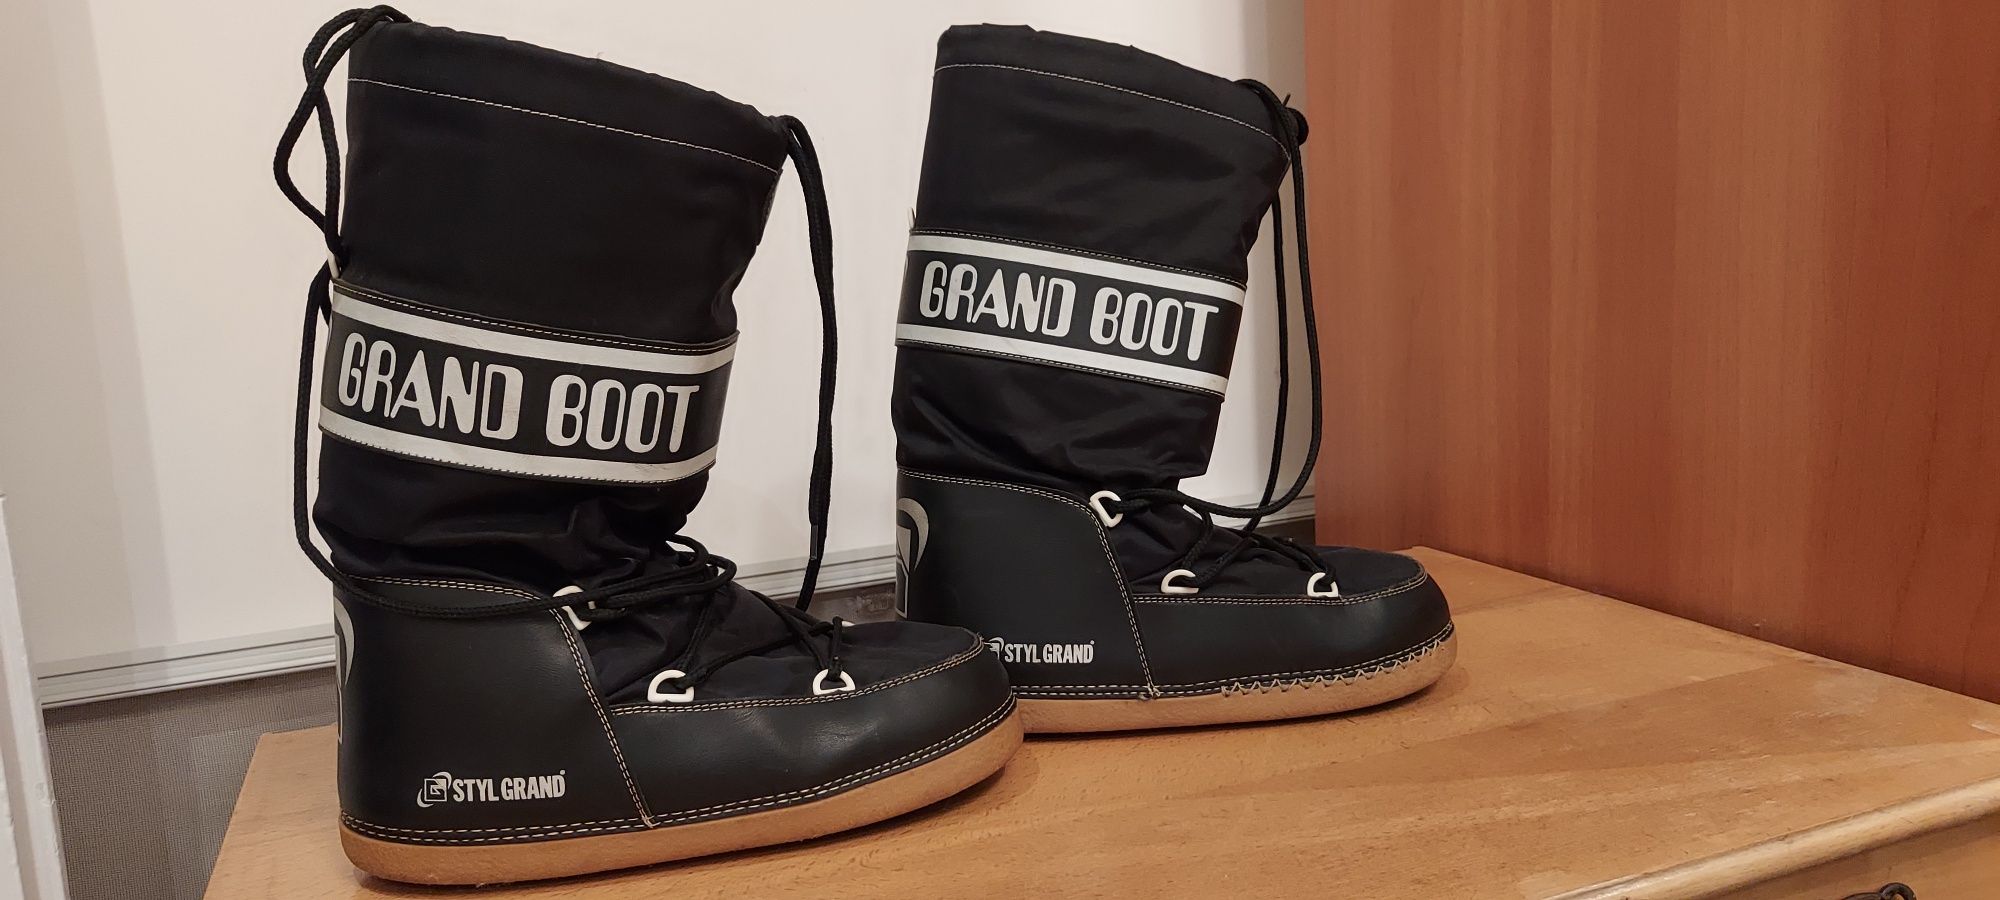 Boots zapada - Grand Boot